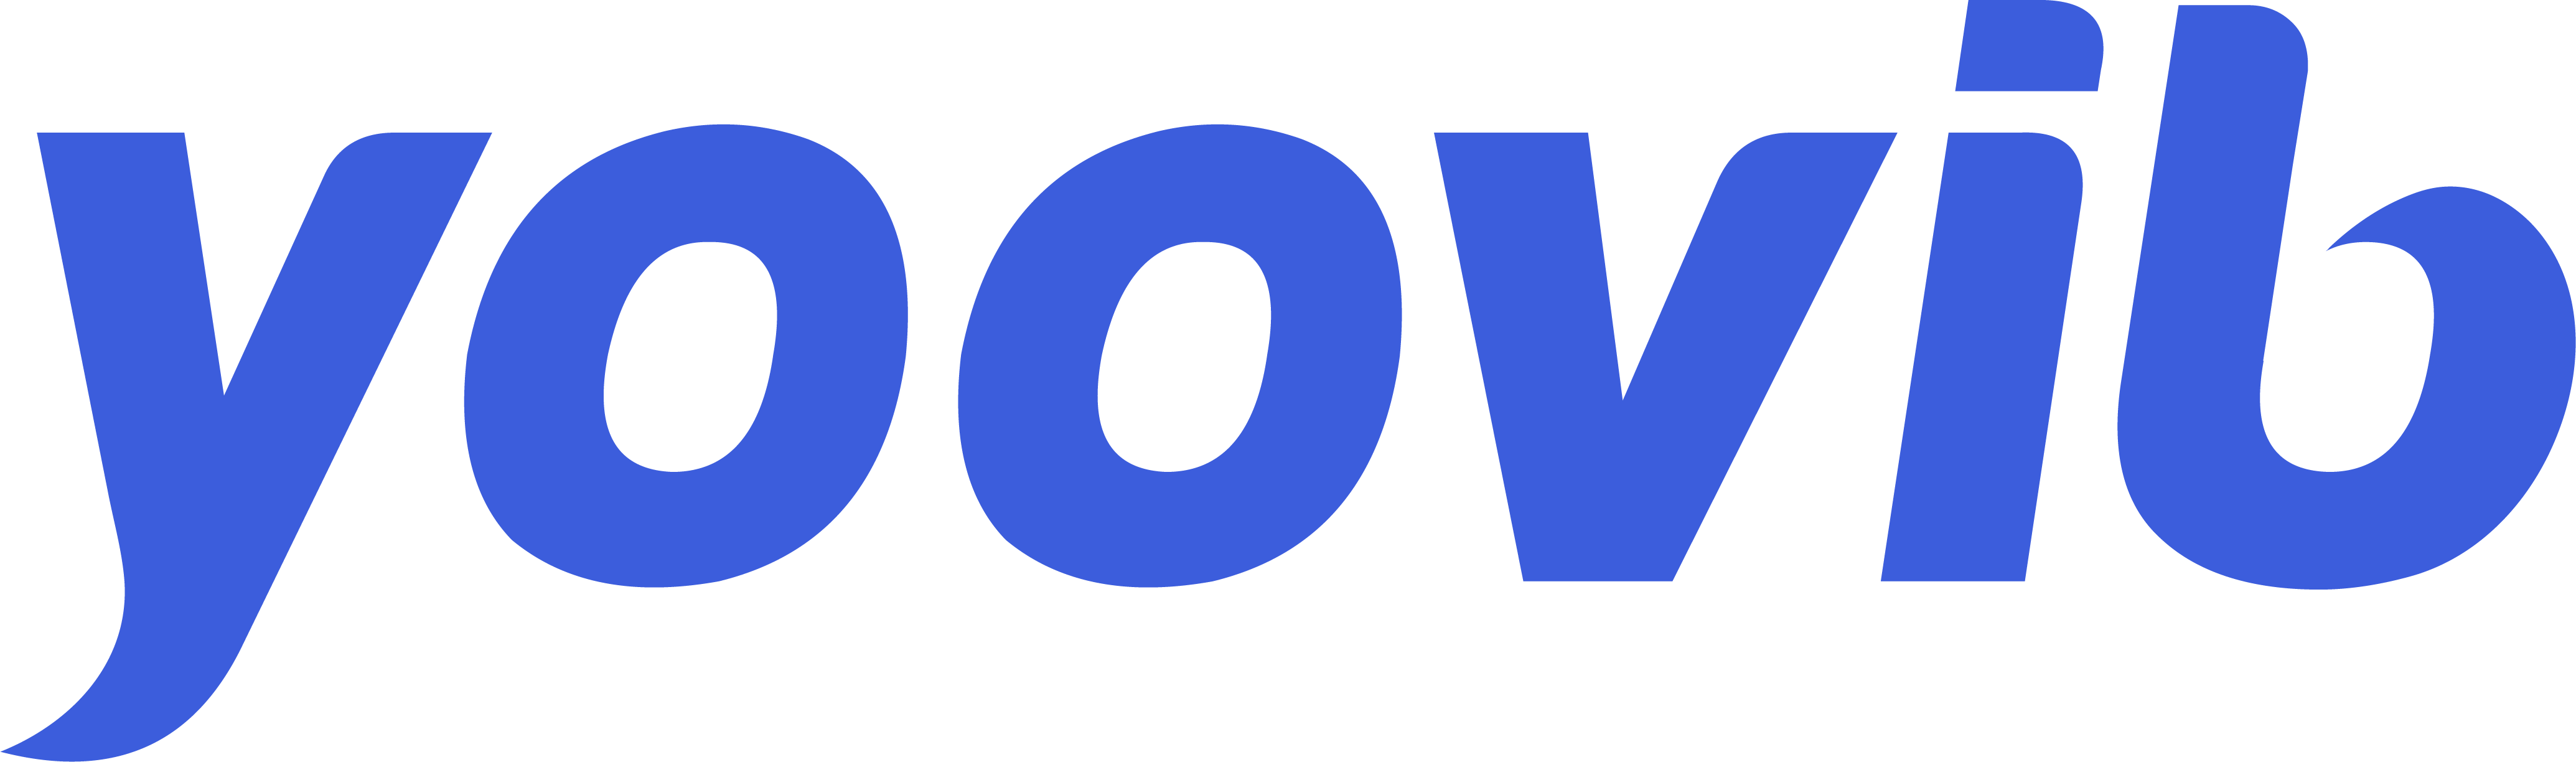 yoovib.com